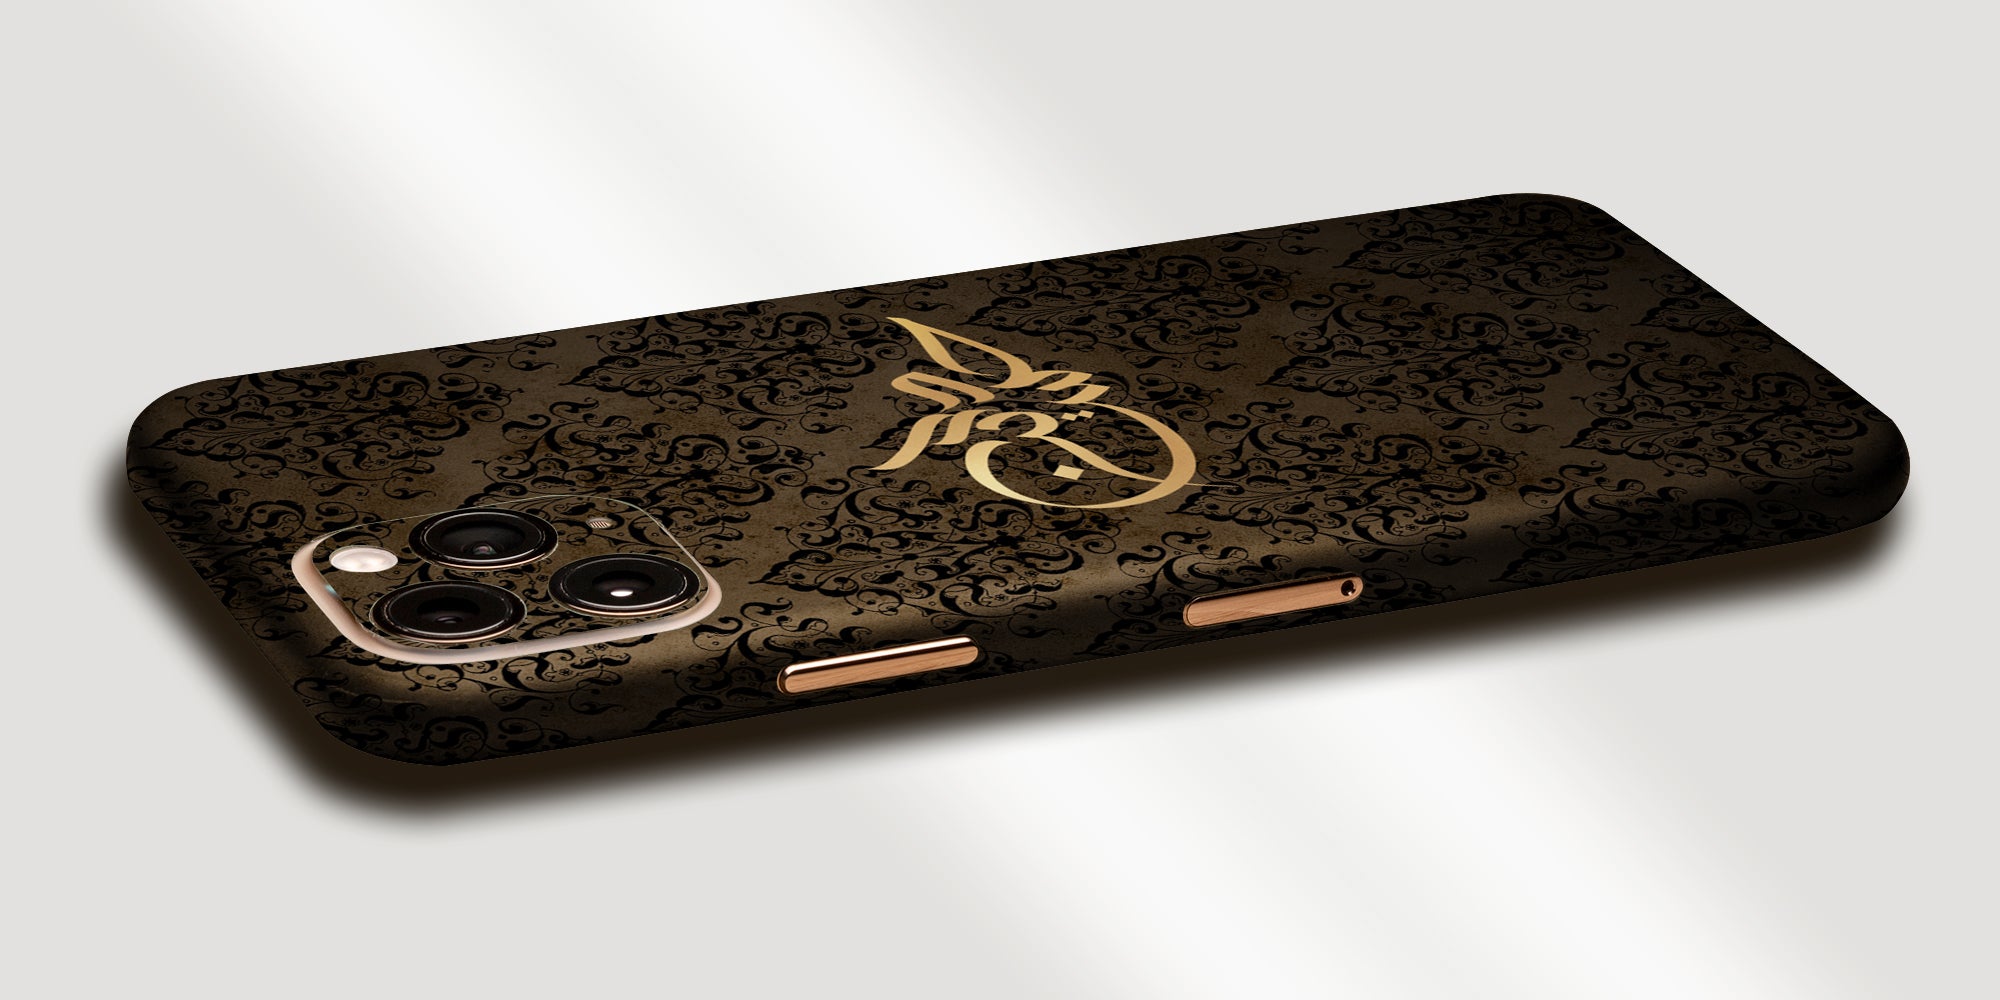 Damask Design Decal Skin With Personalised Arabic Name Phone Wrap - Dark Brown